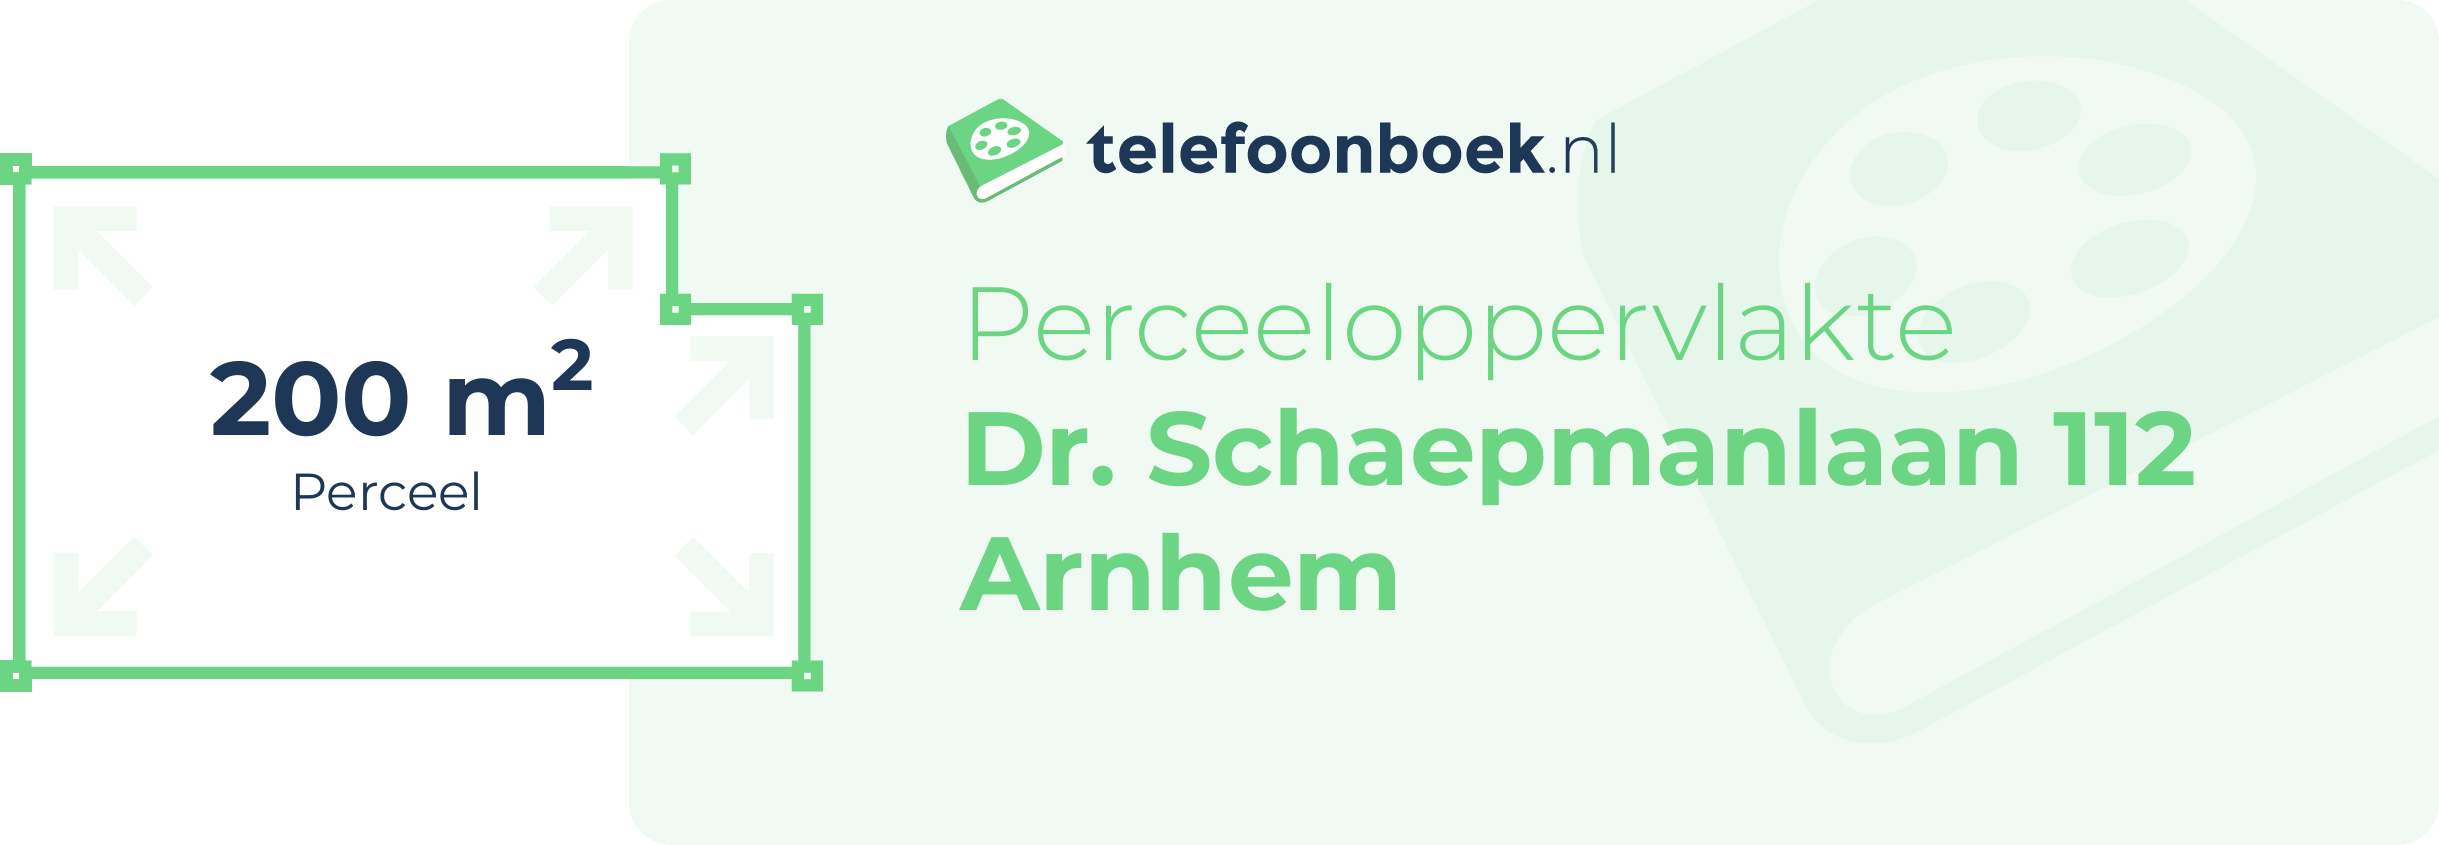 Perceeloppervlakte Dr. Schaepmanlaan 112 Arnhem